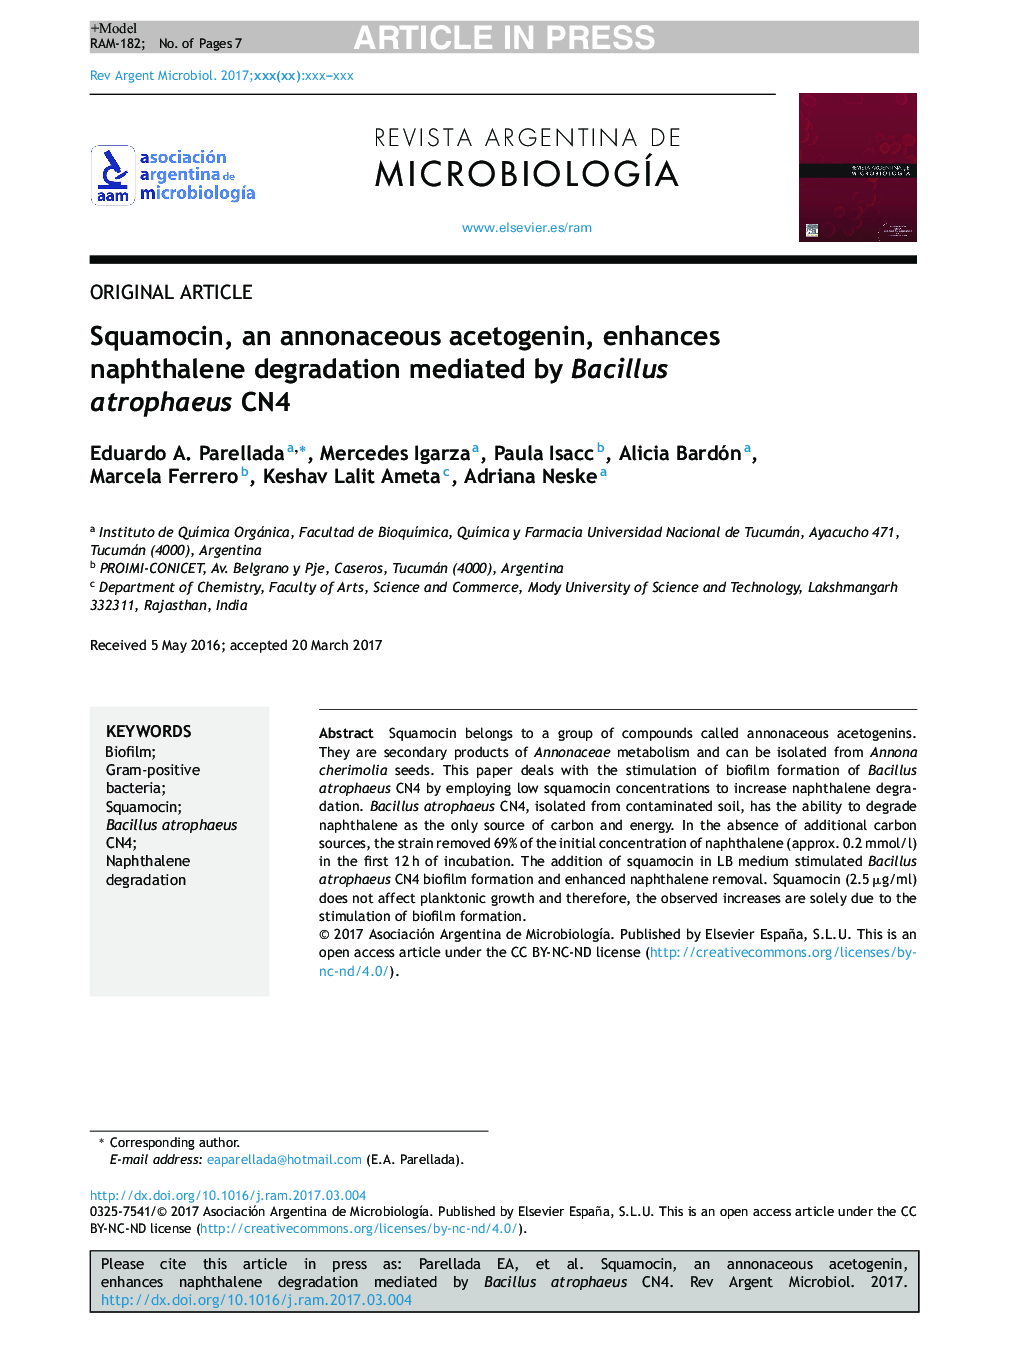 Squamocin, an annonaceous acetogenin, enhances naphthalene degradation mediated by Bacillus atrophaeus CN4